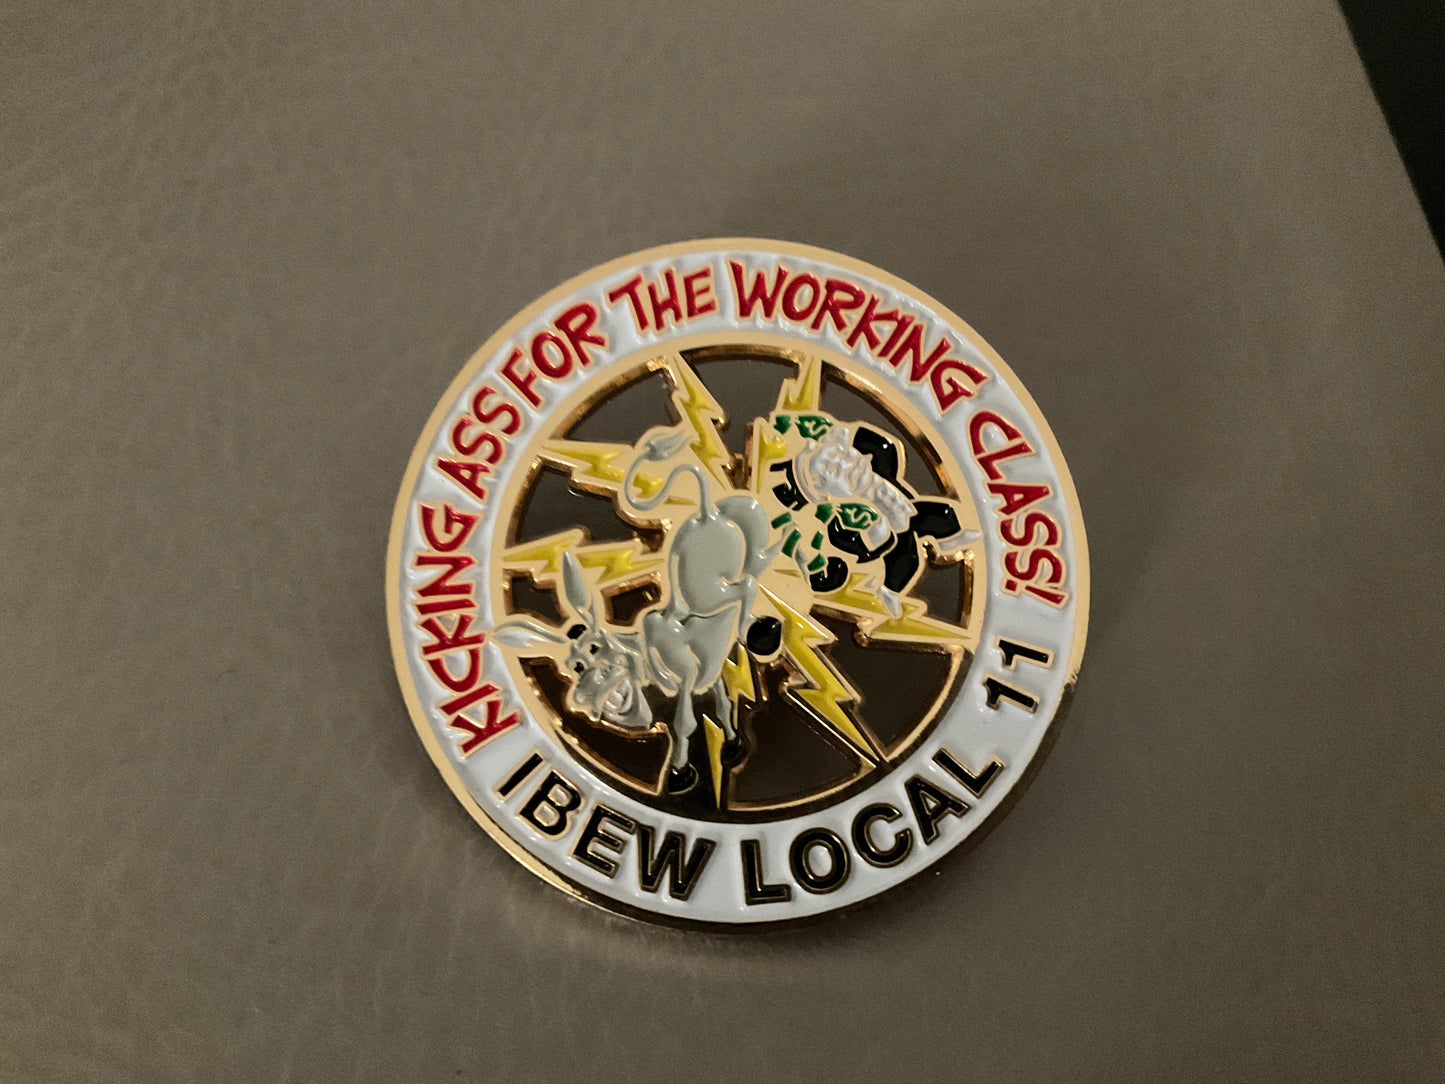 Kicking ass for the working class pin